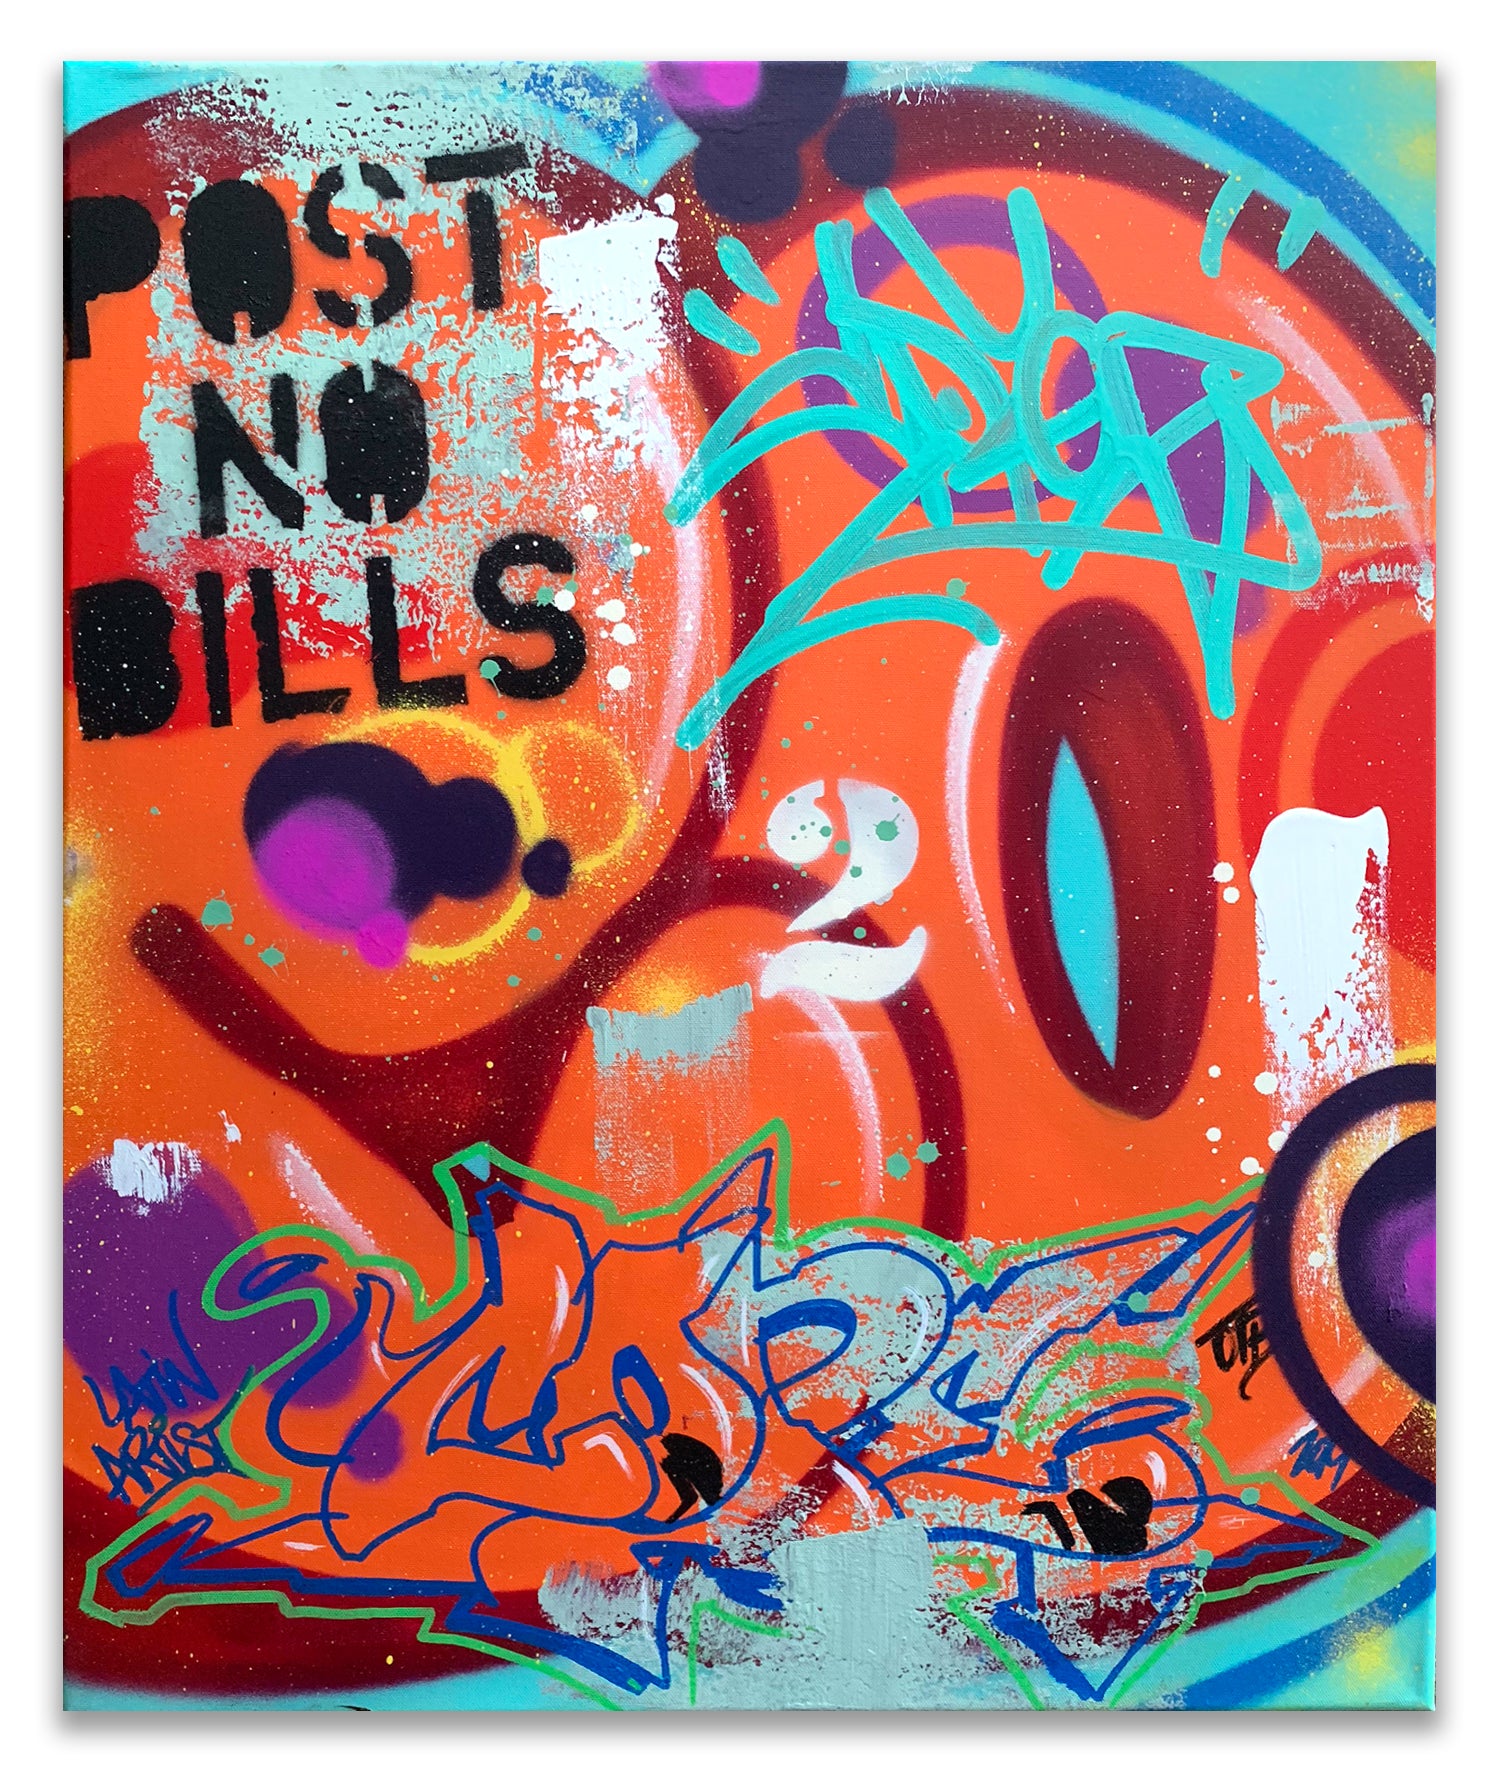 COPE2  "Post No Bills" Painting